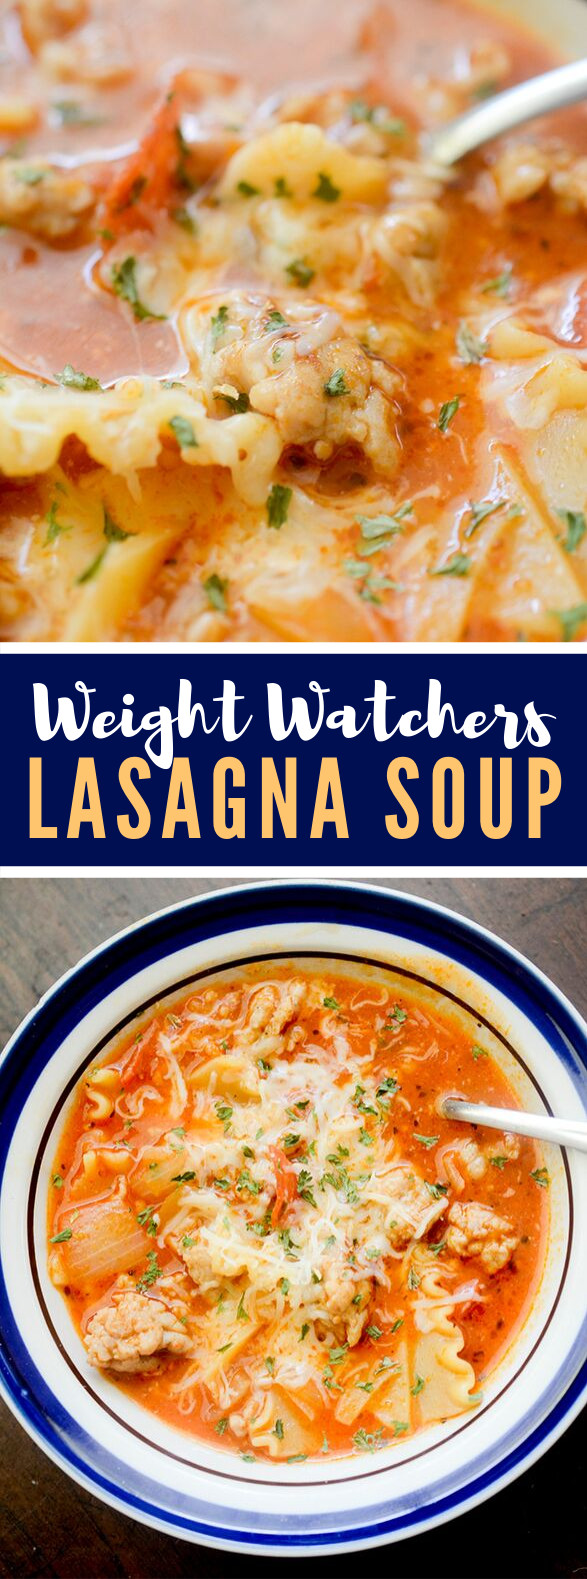 Weight Watchers Lasagna Soup
 WEIGHT WATCHERS LASAGNA SOUP healthy t